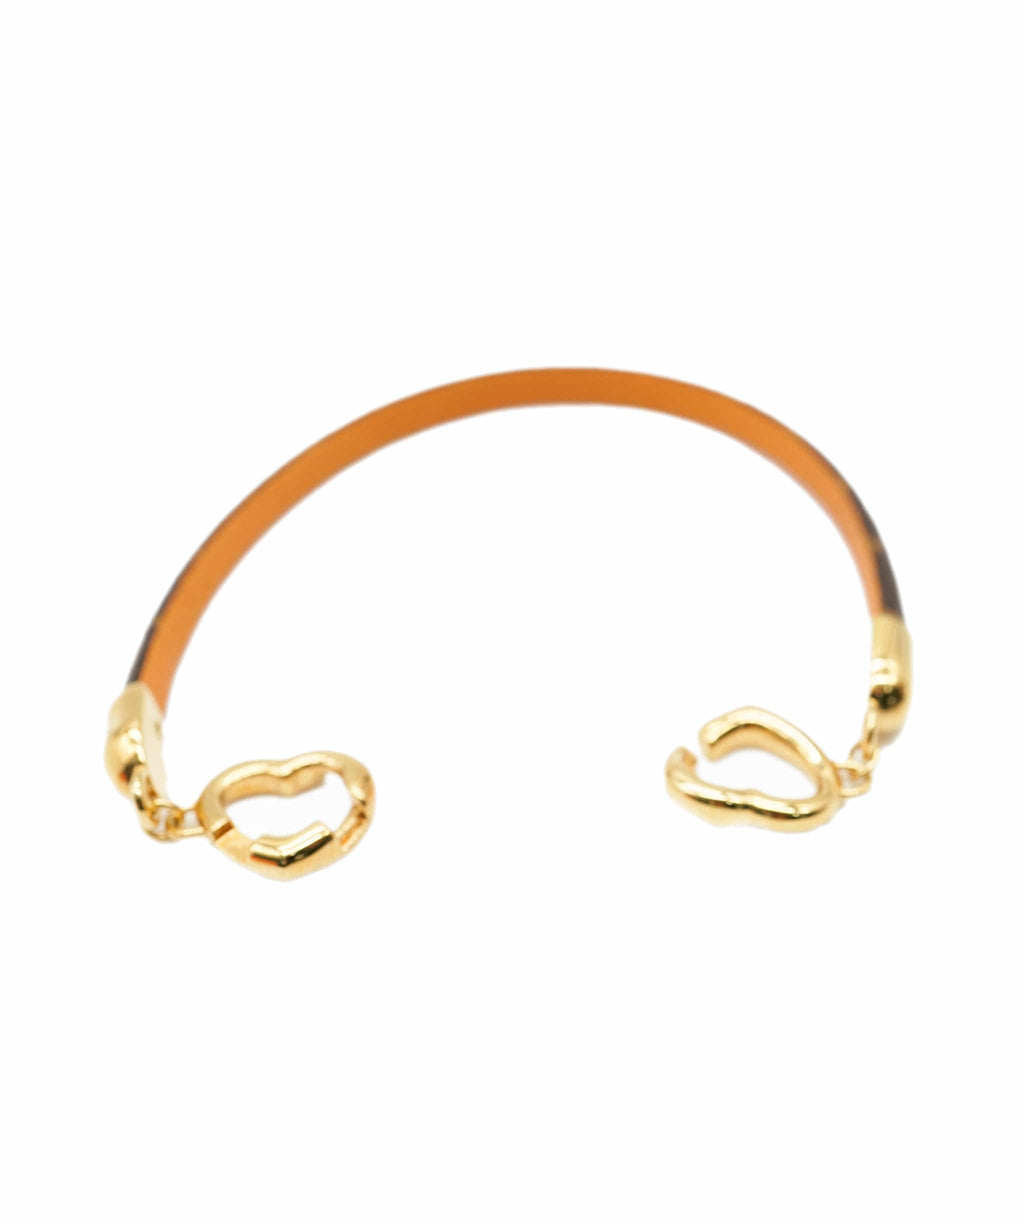 Louis Vuitton Say Yes Bracelet